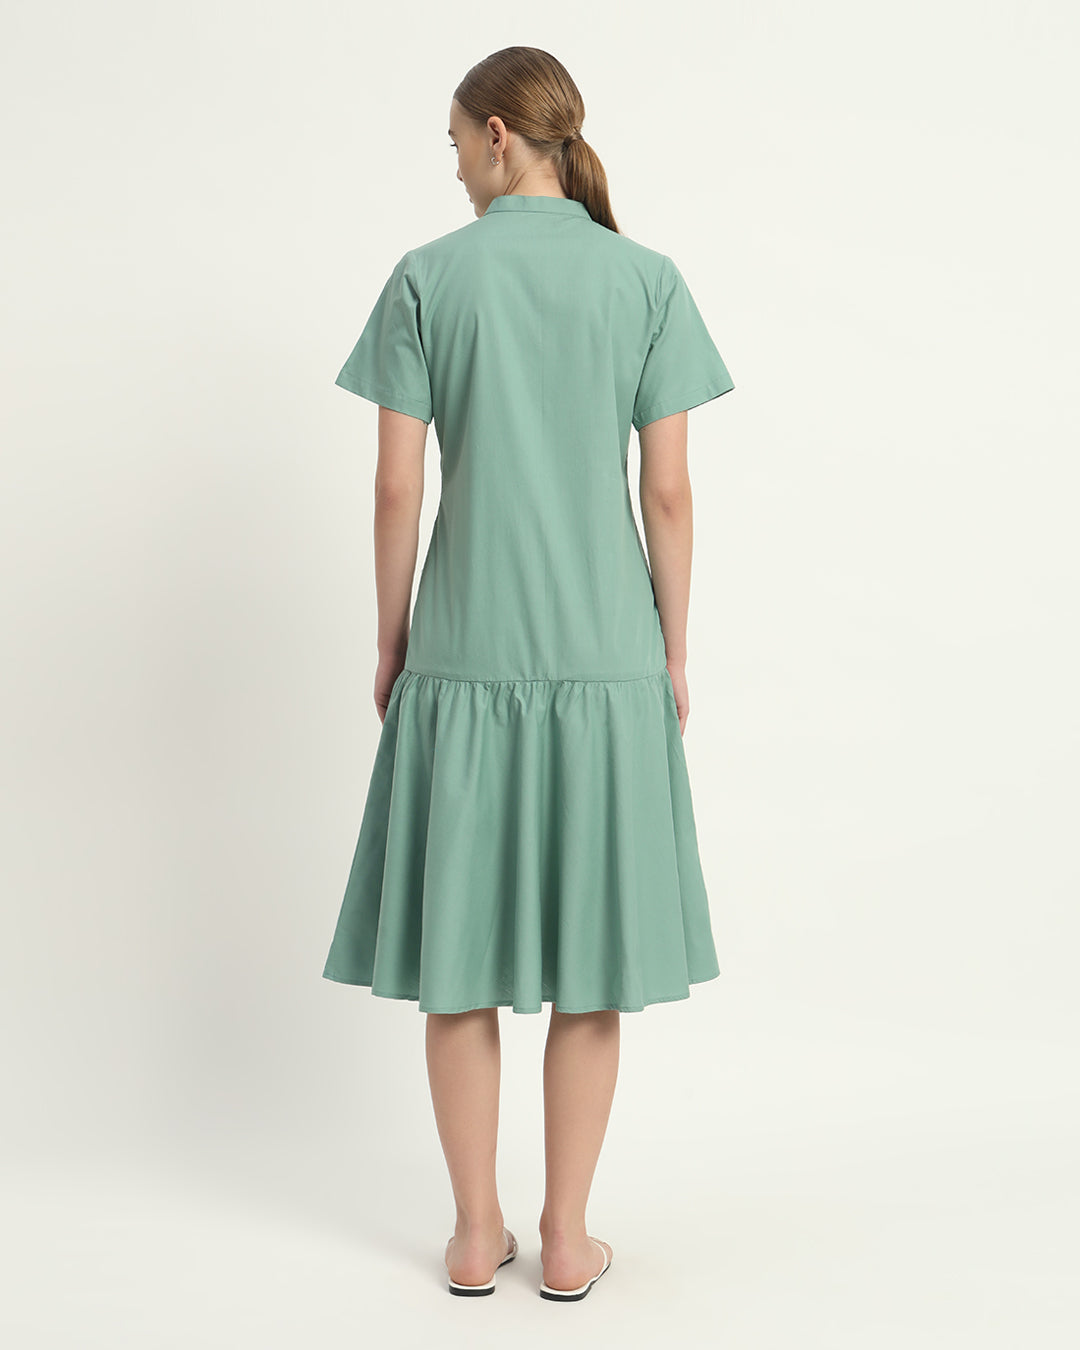 The Mint Melrose Cotton Dress